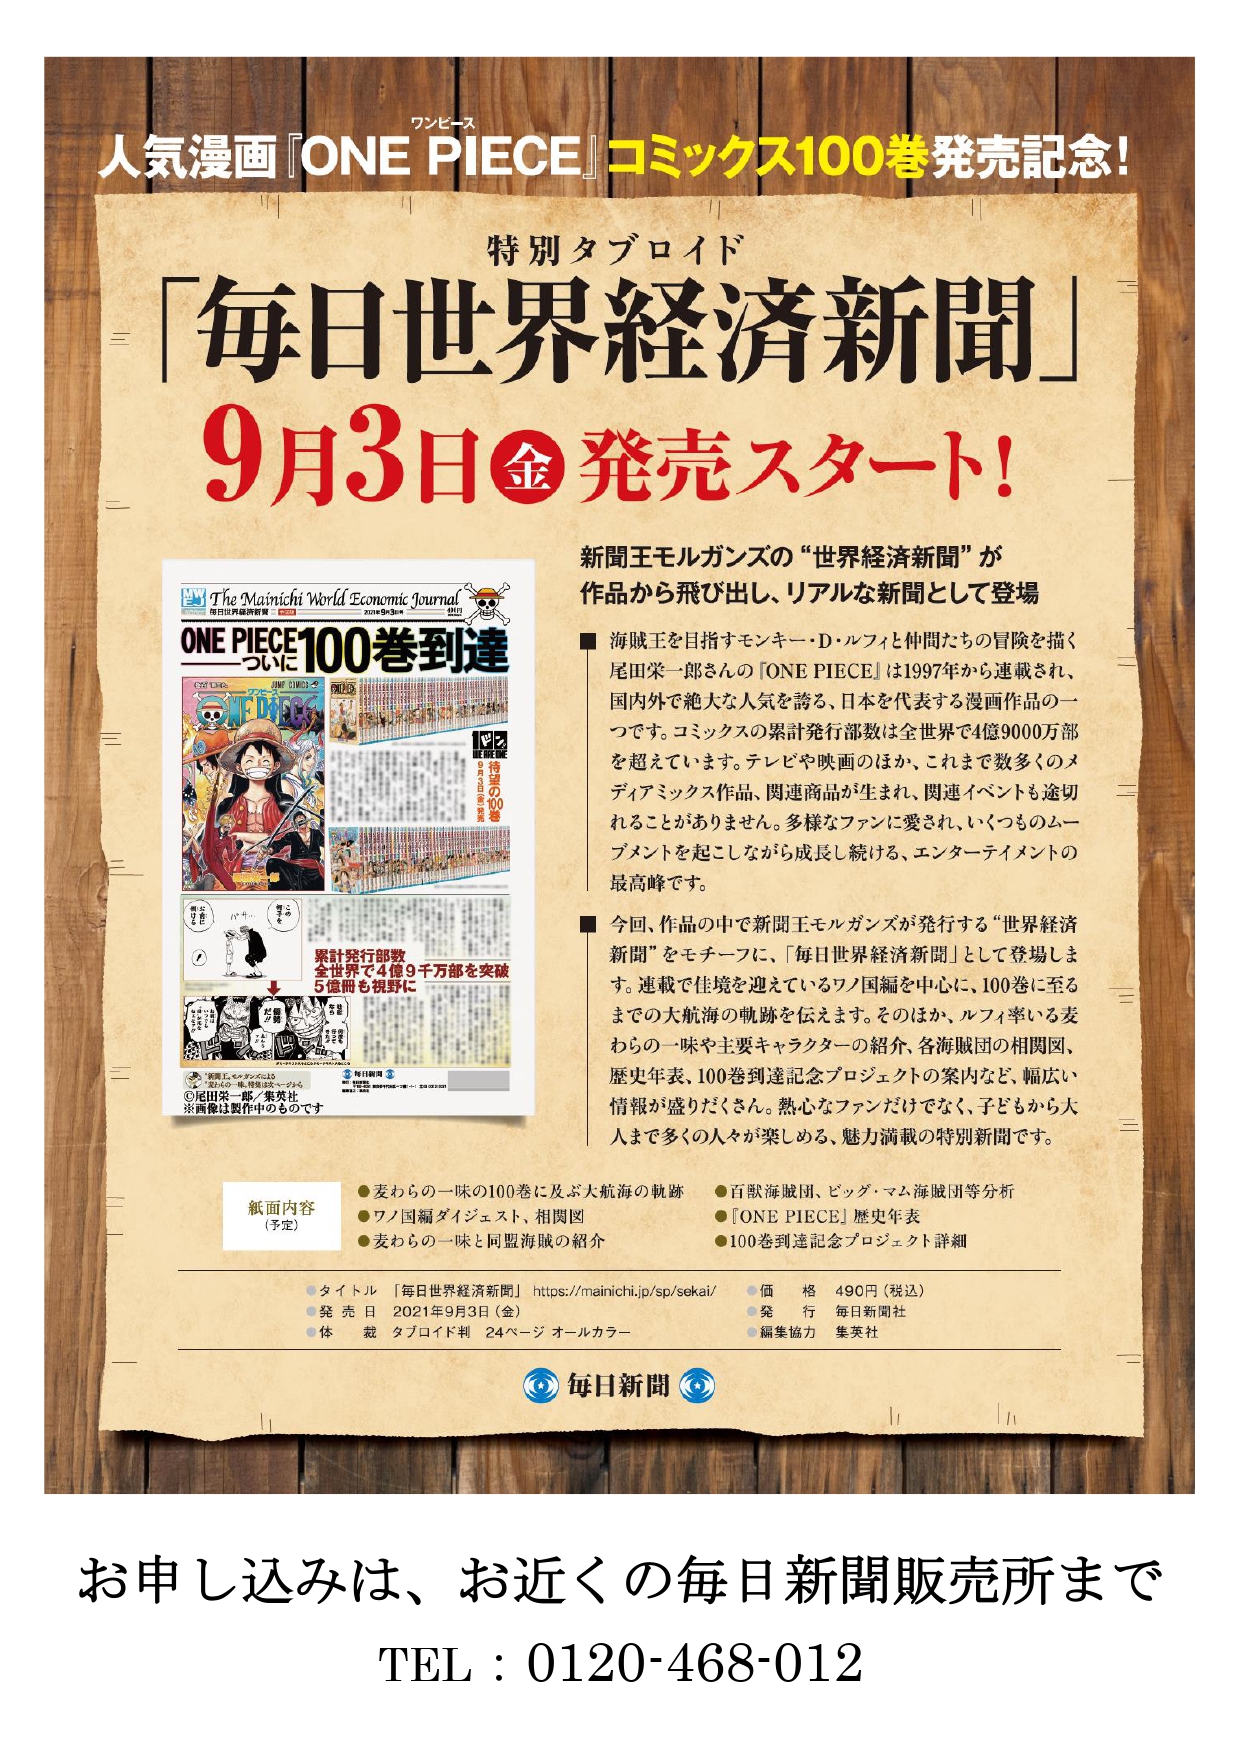 One Piece タブロイド 毎日世界経済新聞 9月3日発売 大阪府毎日会